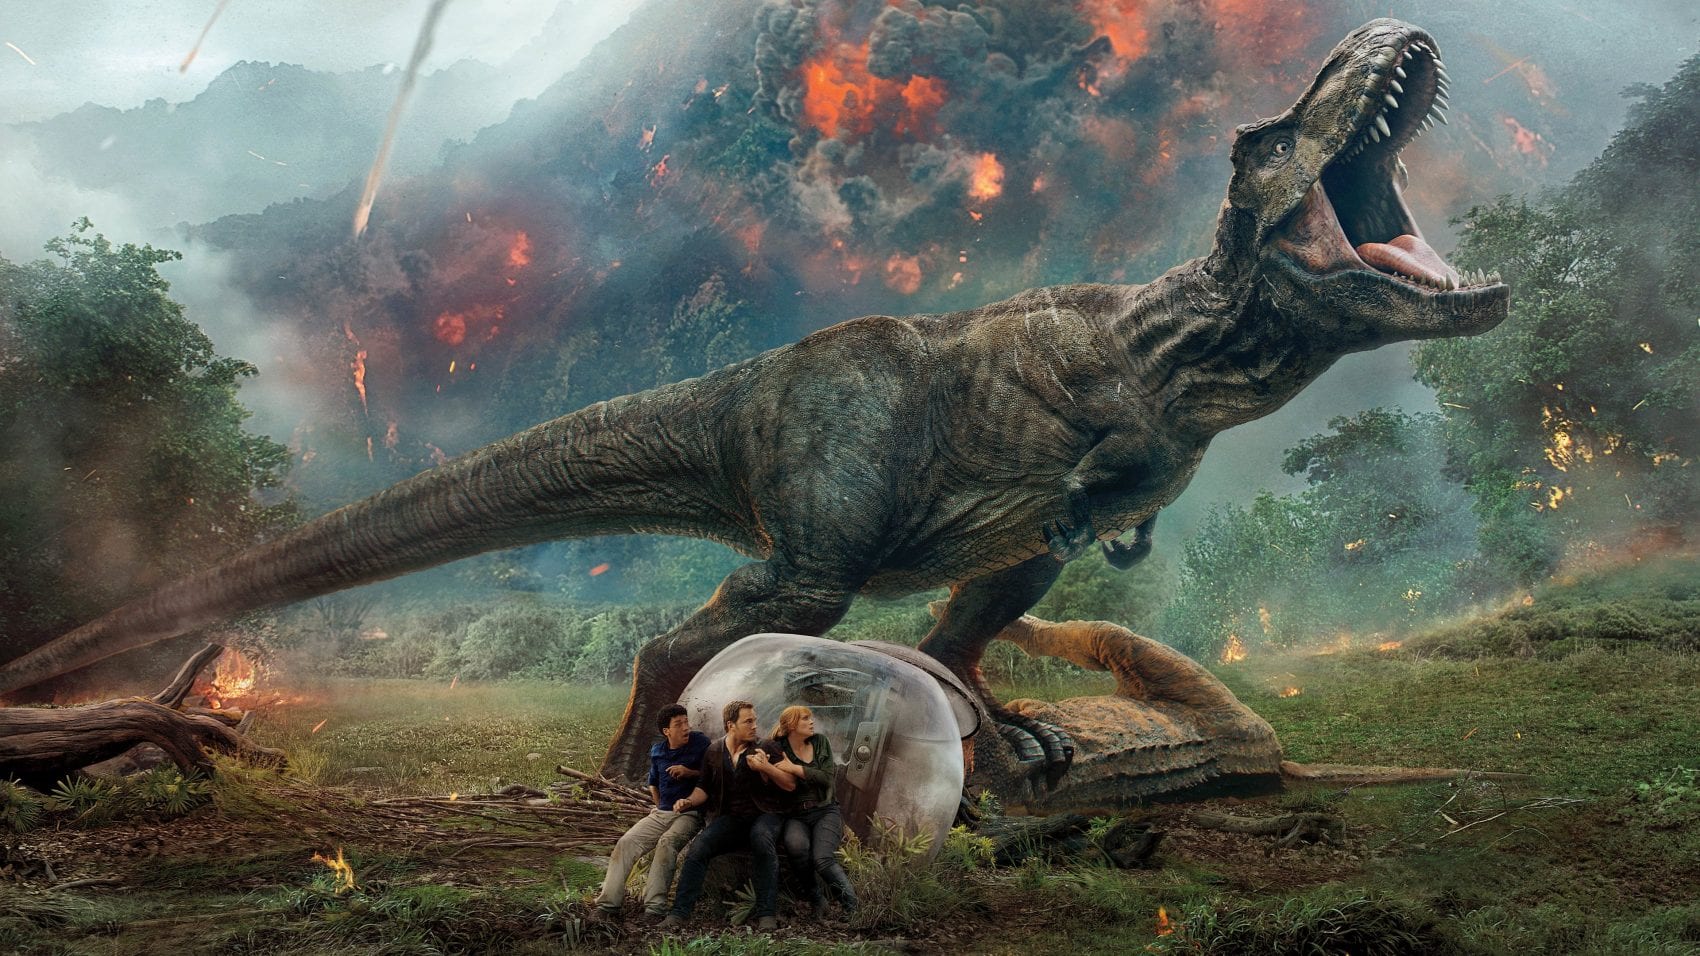  REVIEW – Jurassic World: Fallen Kingdom